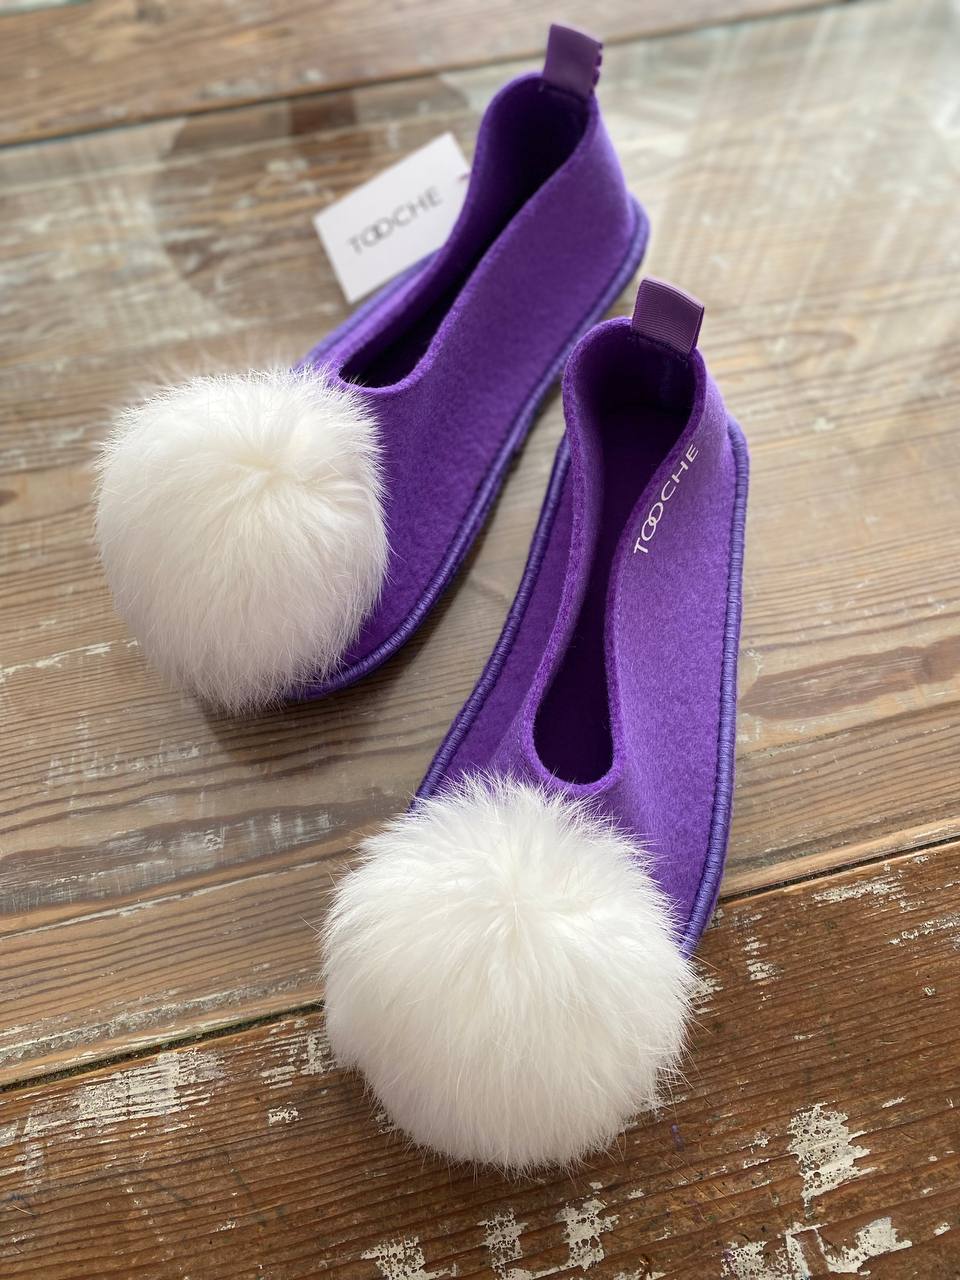 PURPLE WHITE slippers